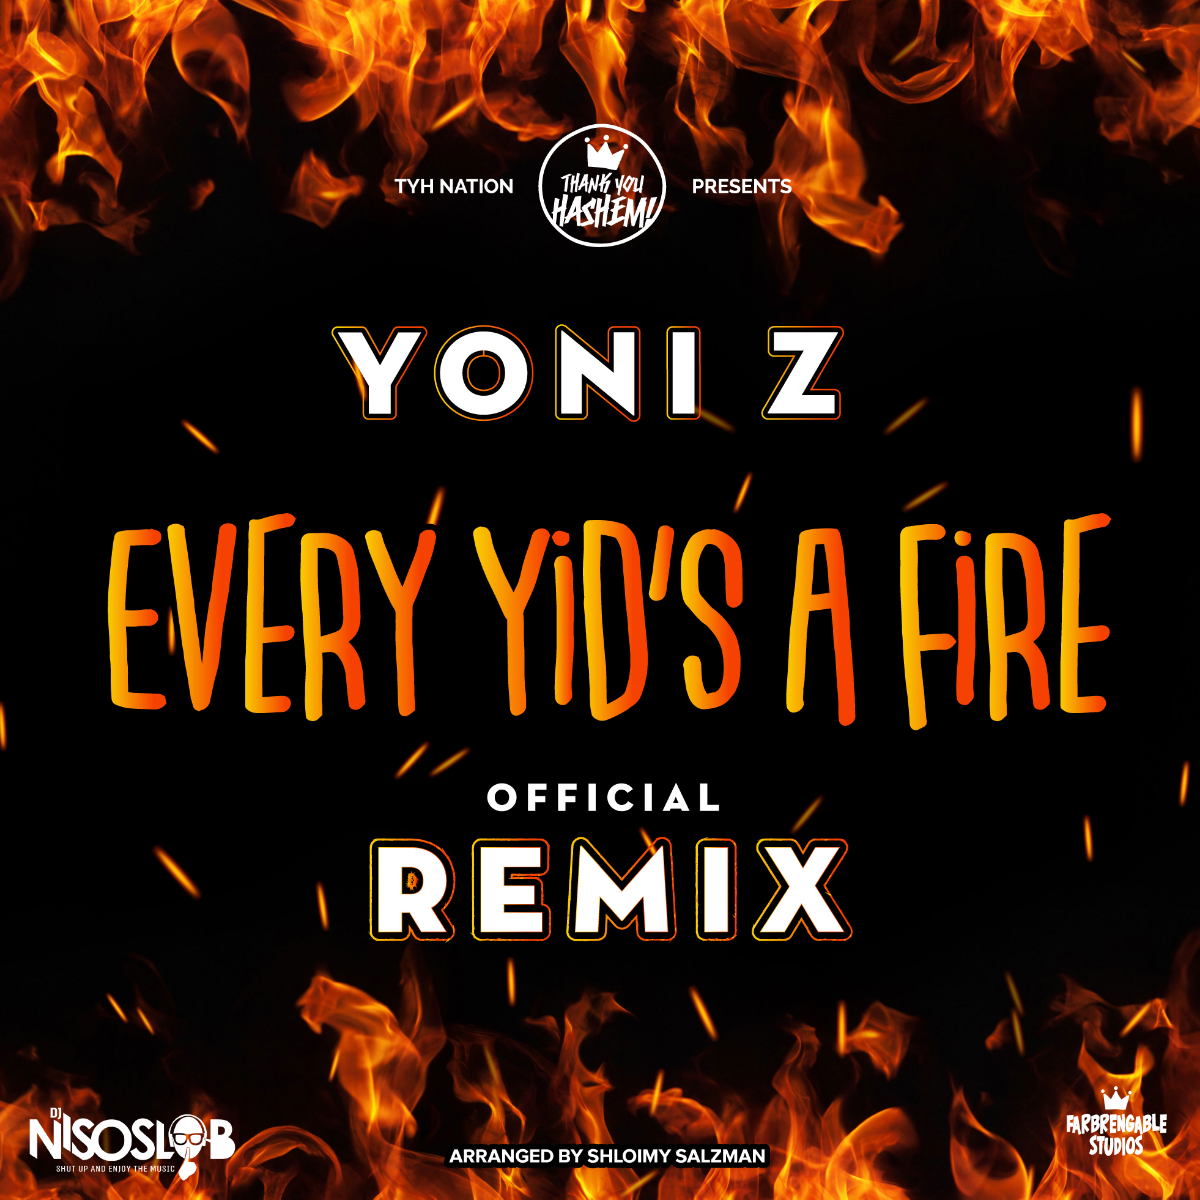 Yoni Z - Every Yid's A Fire [Remixed By DJ Niso Slob] (Single)